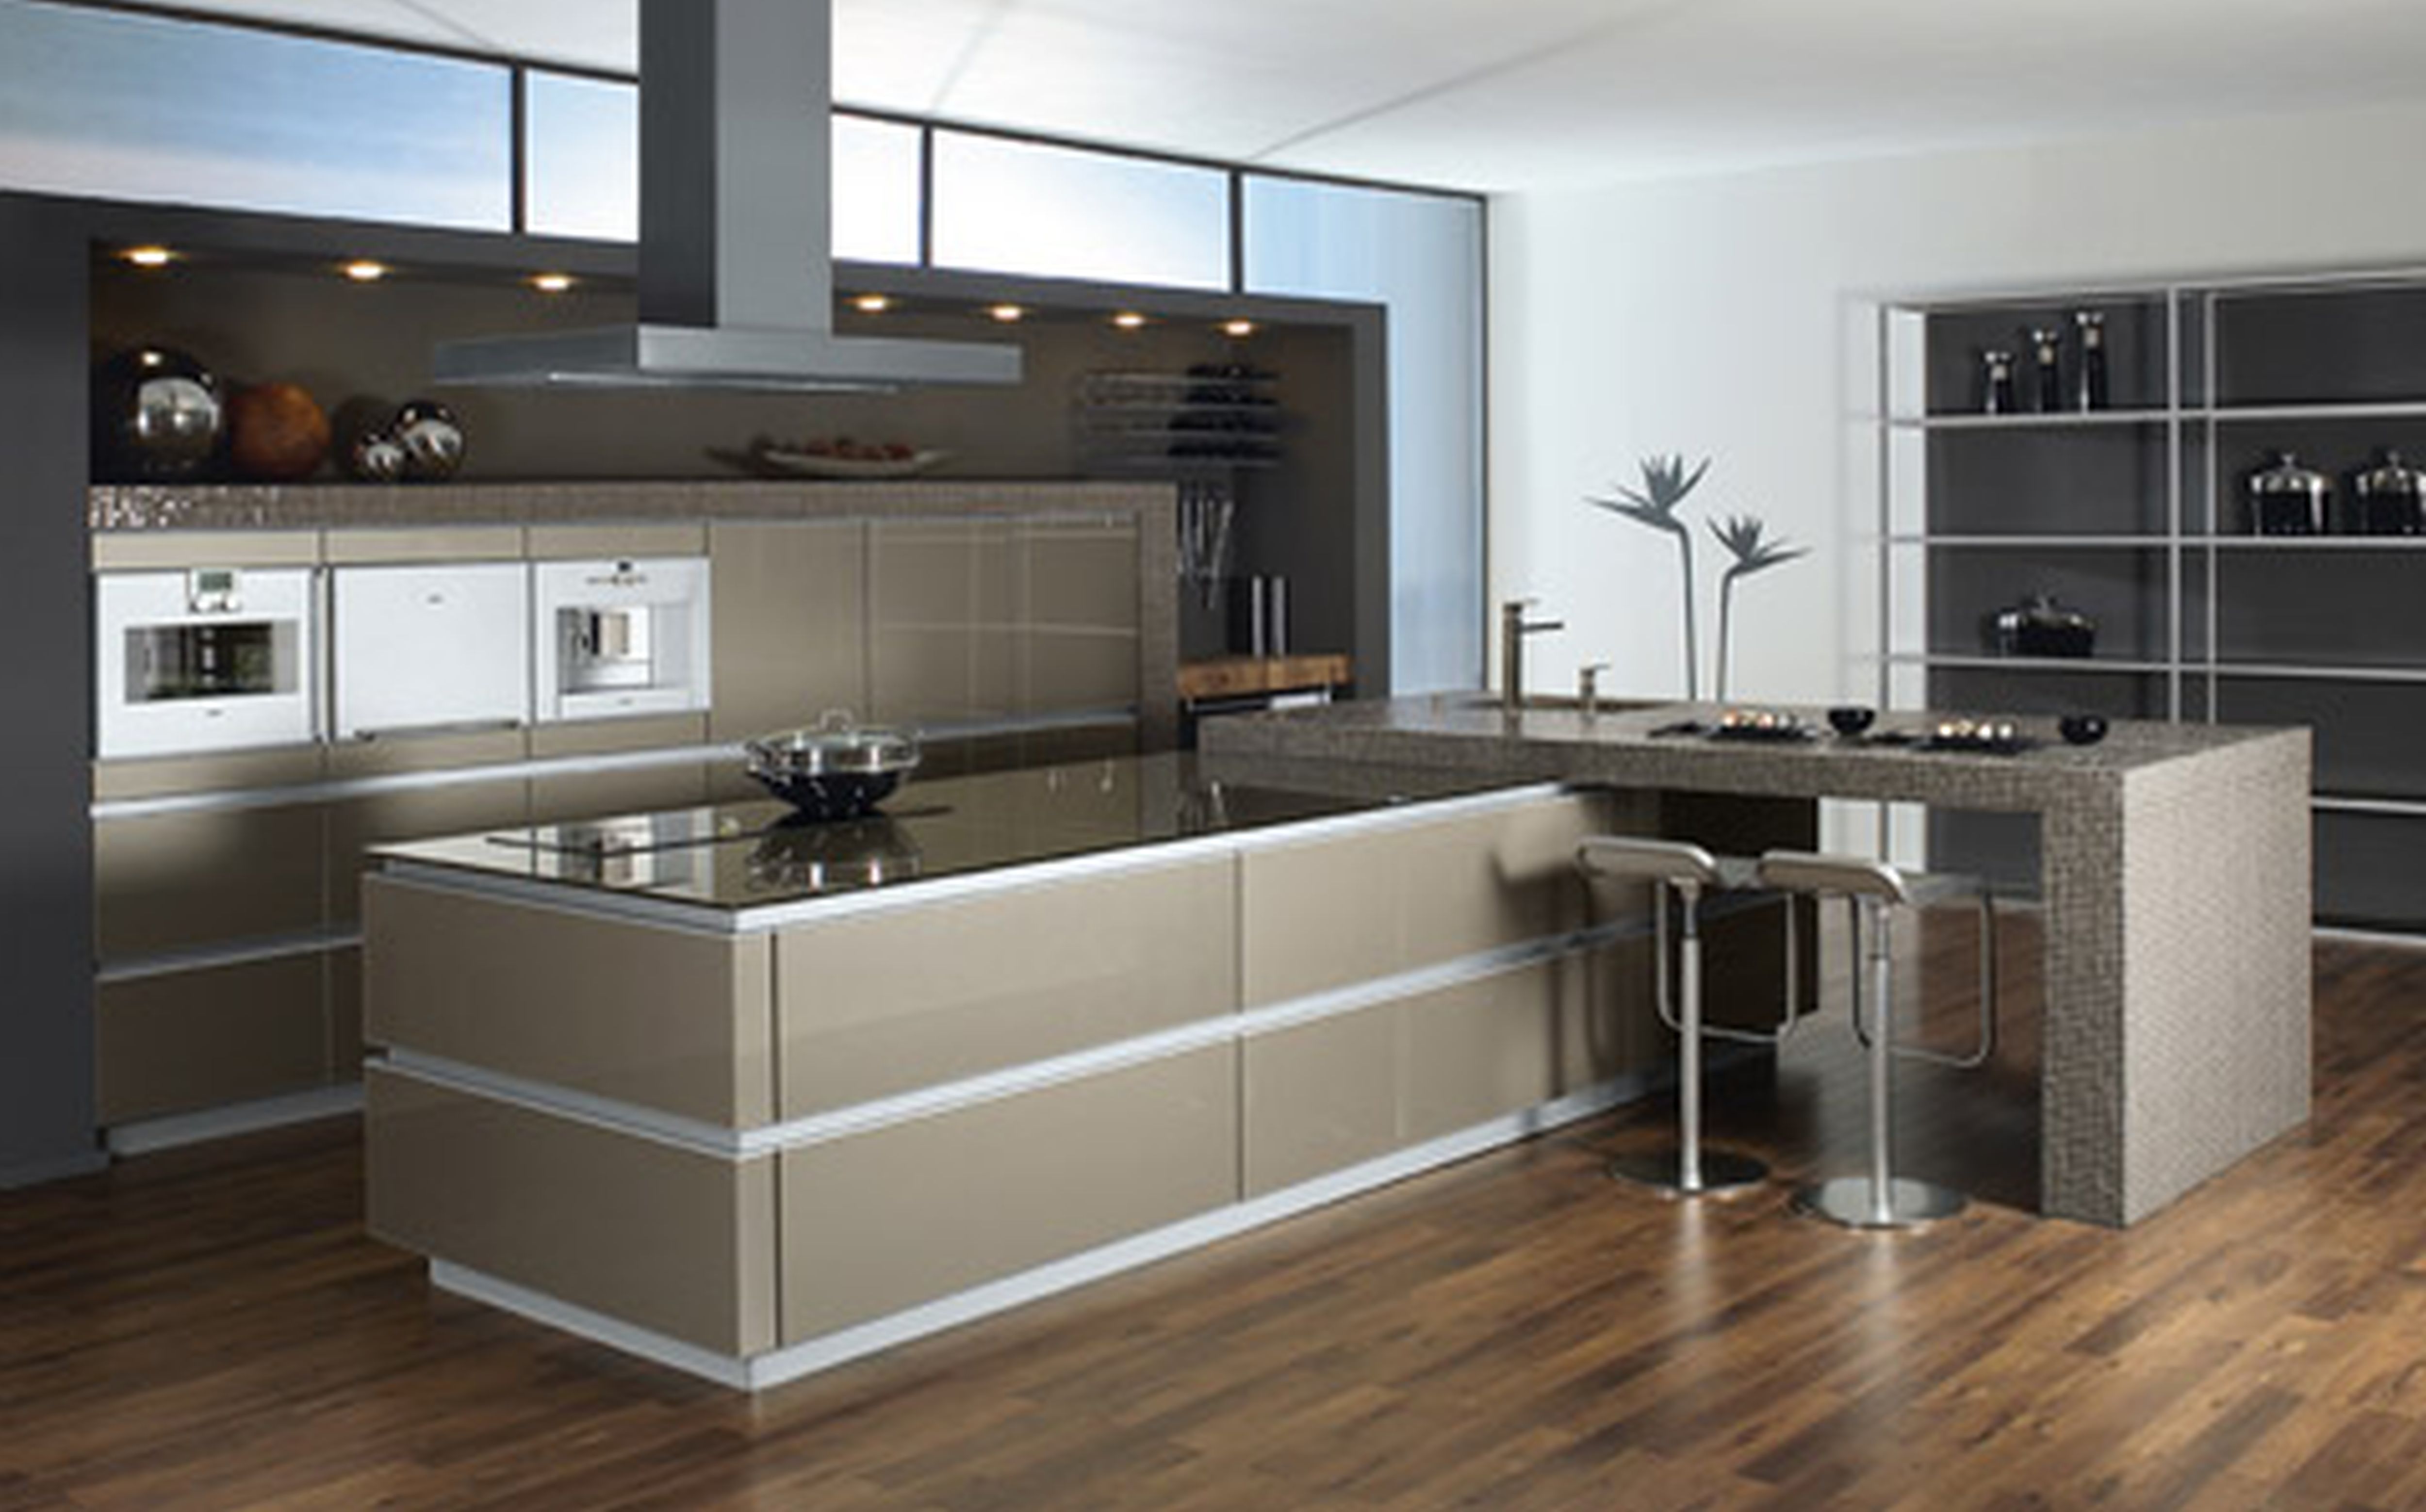 kitchen modern cabinets designs kitchens cabinet interior luxury aluminium contemporary furniture layout island decor islands house inspiring zapisano virtual info